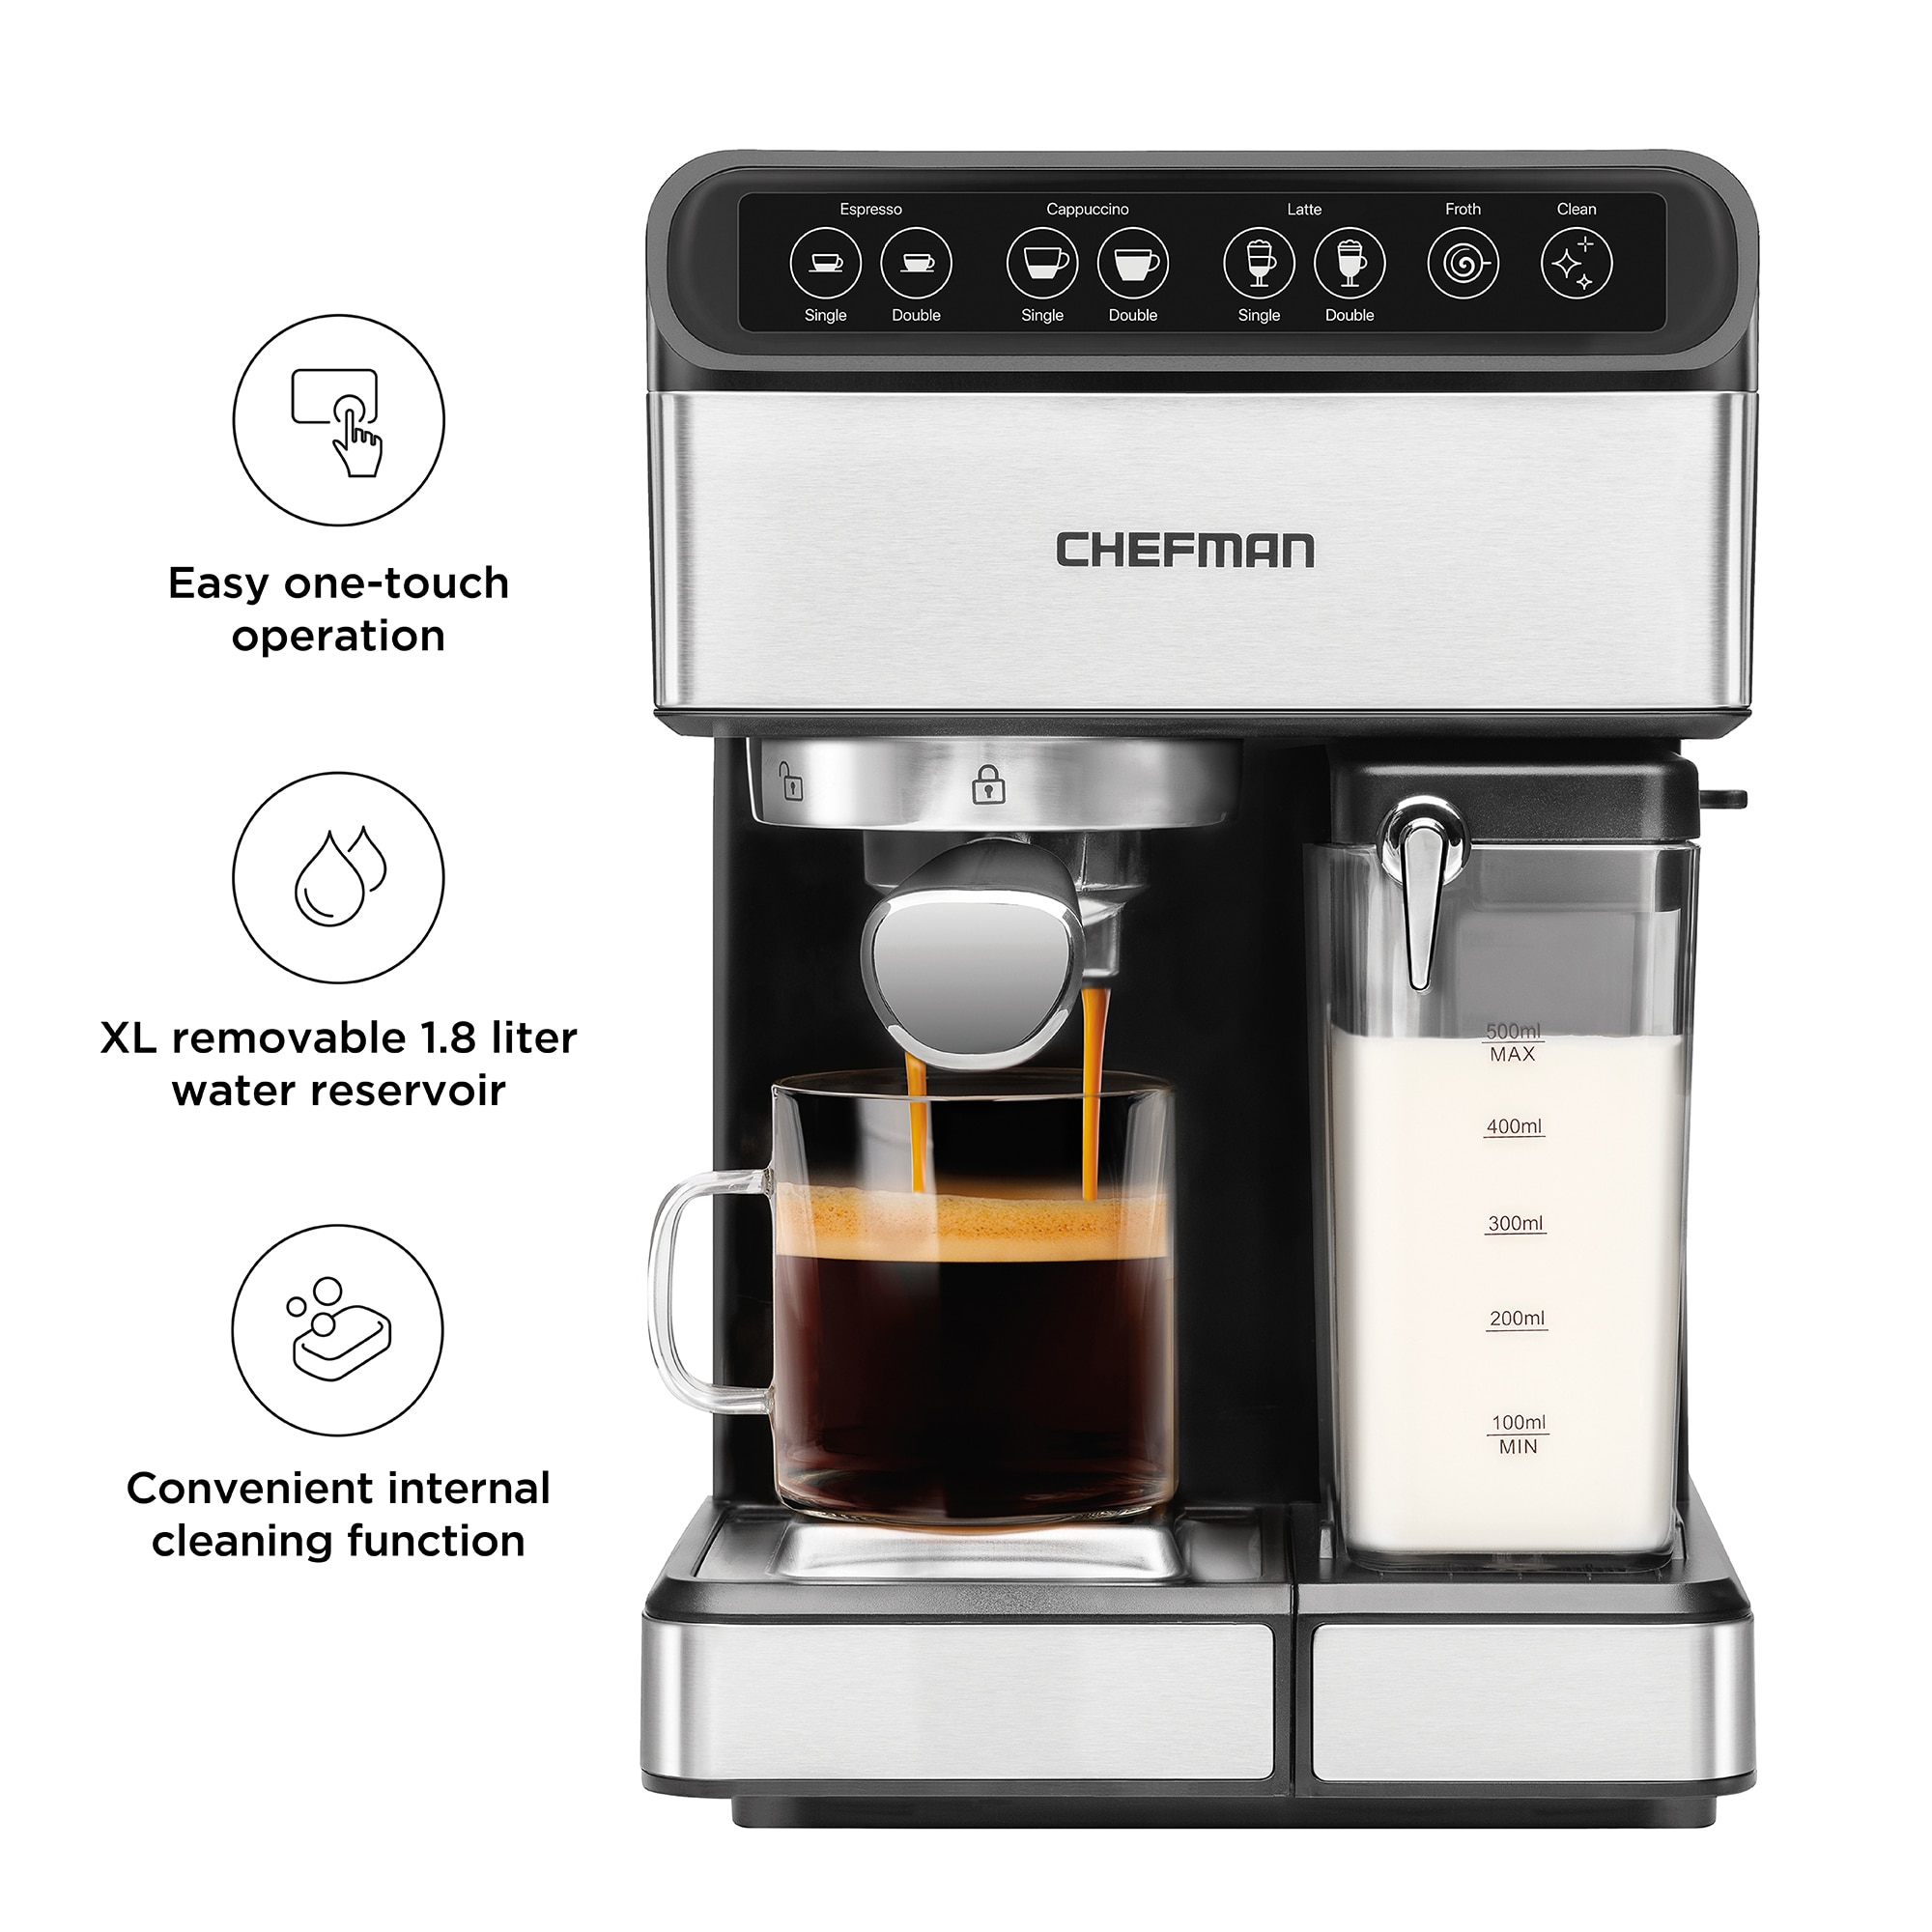 Wirsh Espresso Machine, 20 Bar Espresso Maker with Plastic Free Portafitler and Steamer for Latte and Cappuccino,Expresso Coffee Machine with Pressure